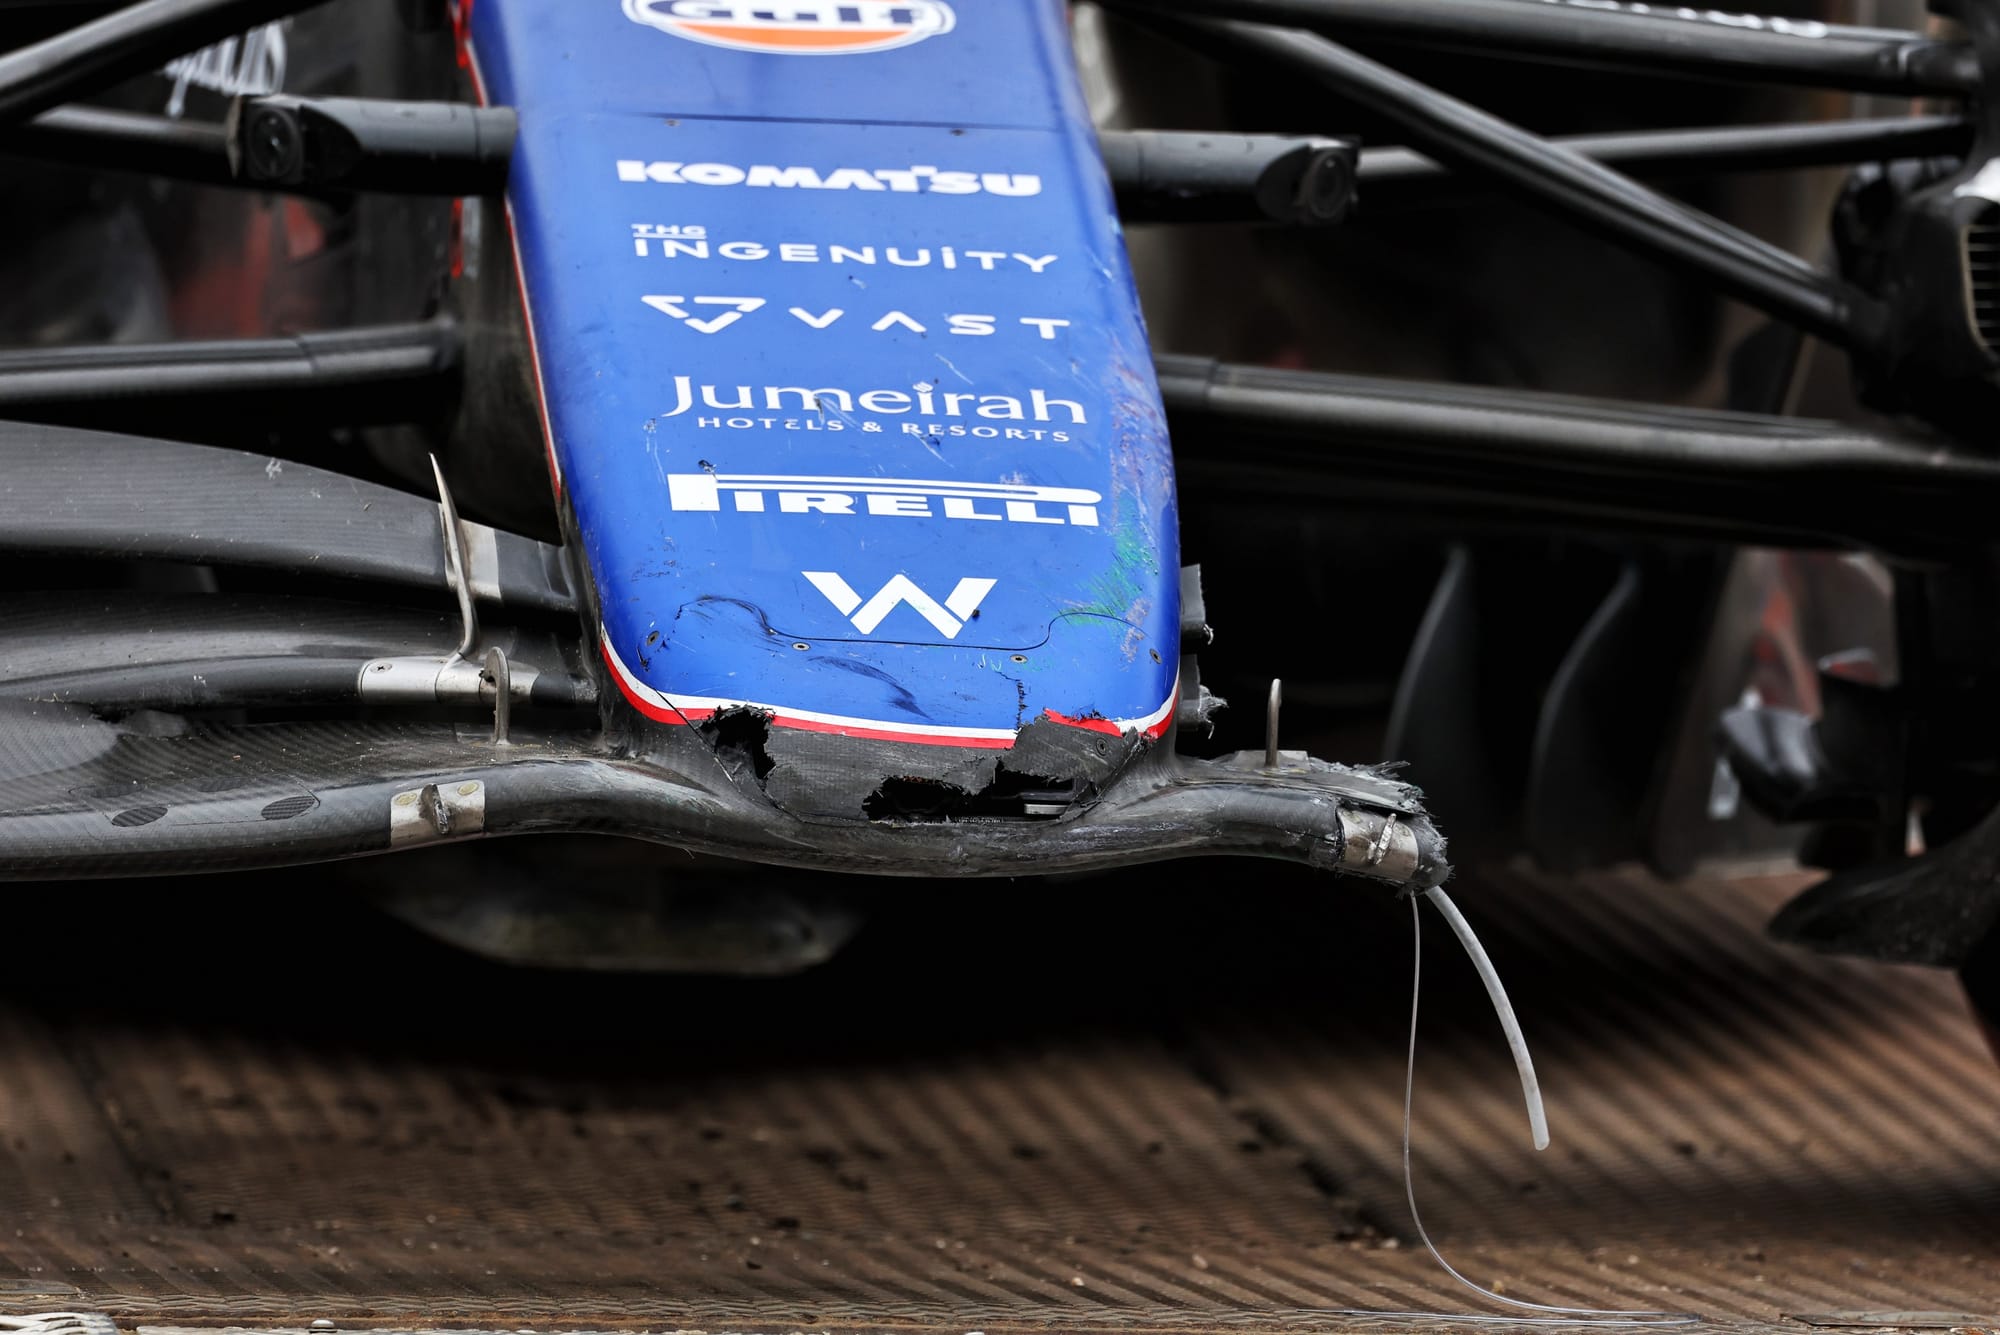 Damaged Williams F1 car